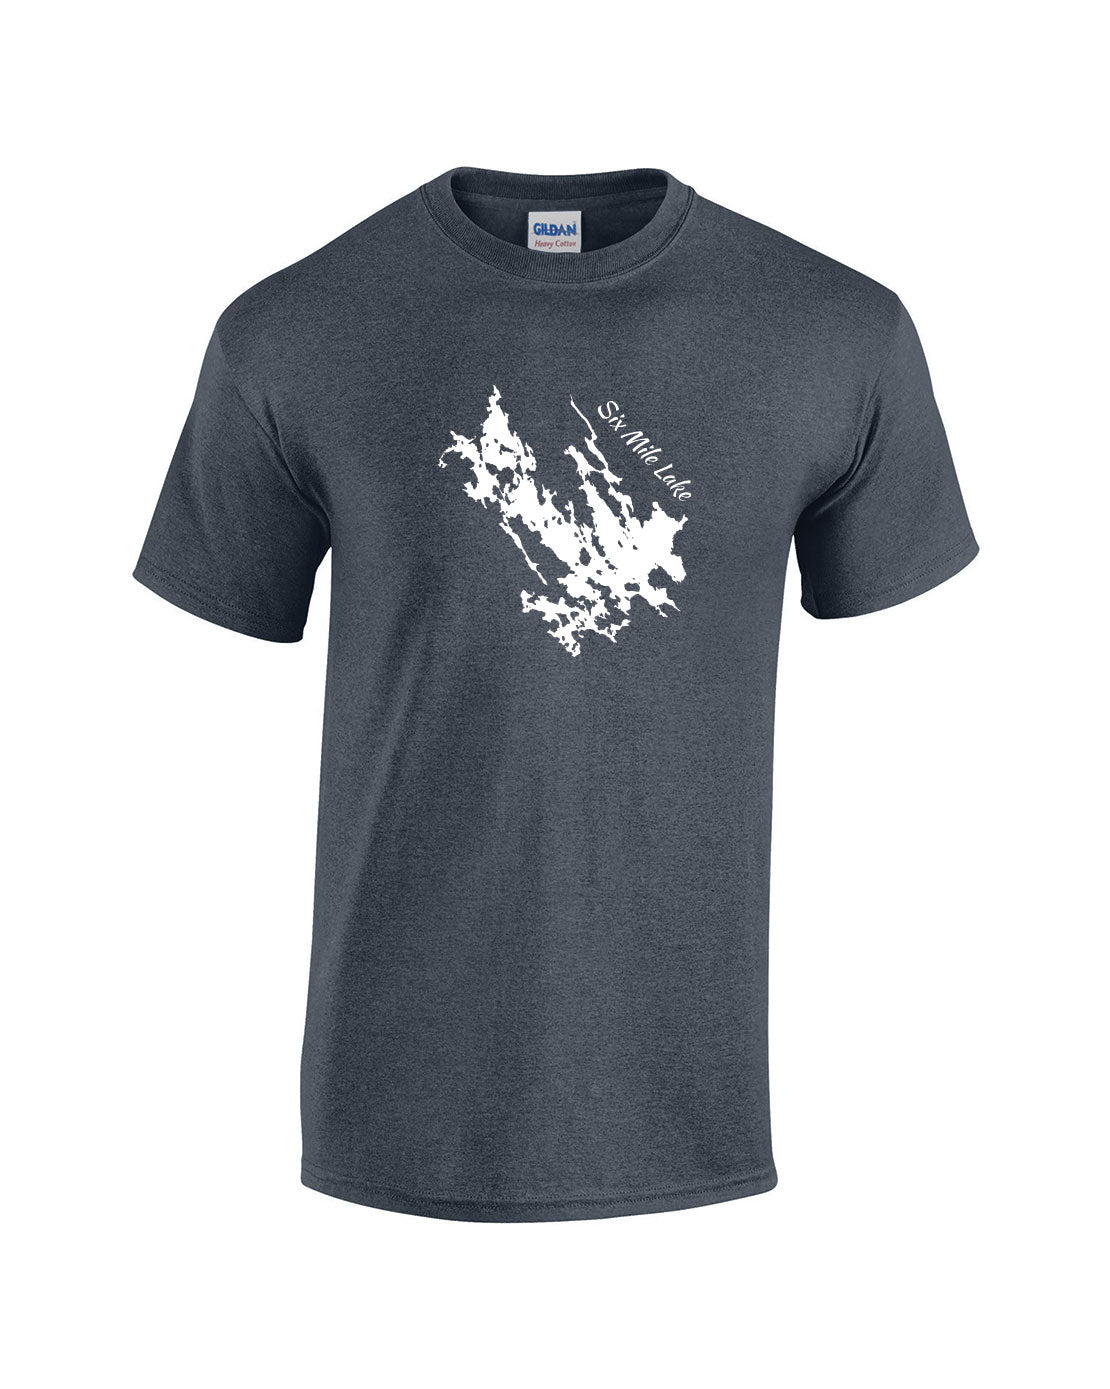 Six Mile Lake T-Shirt